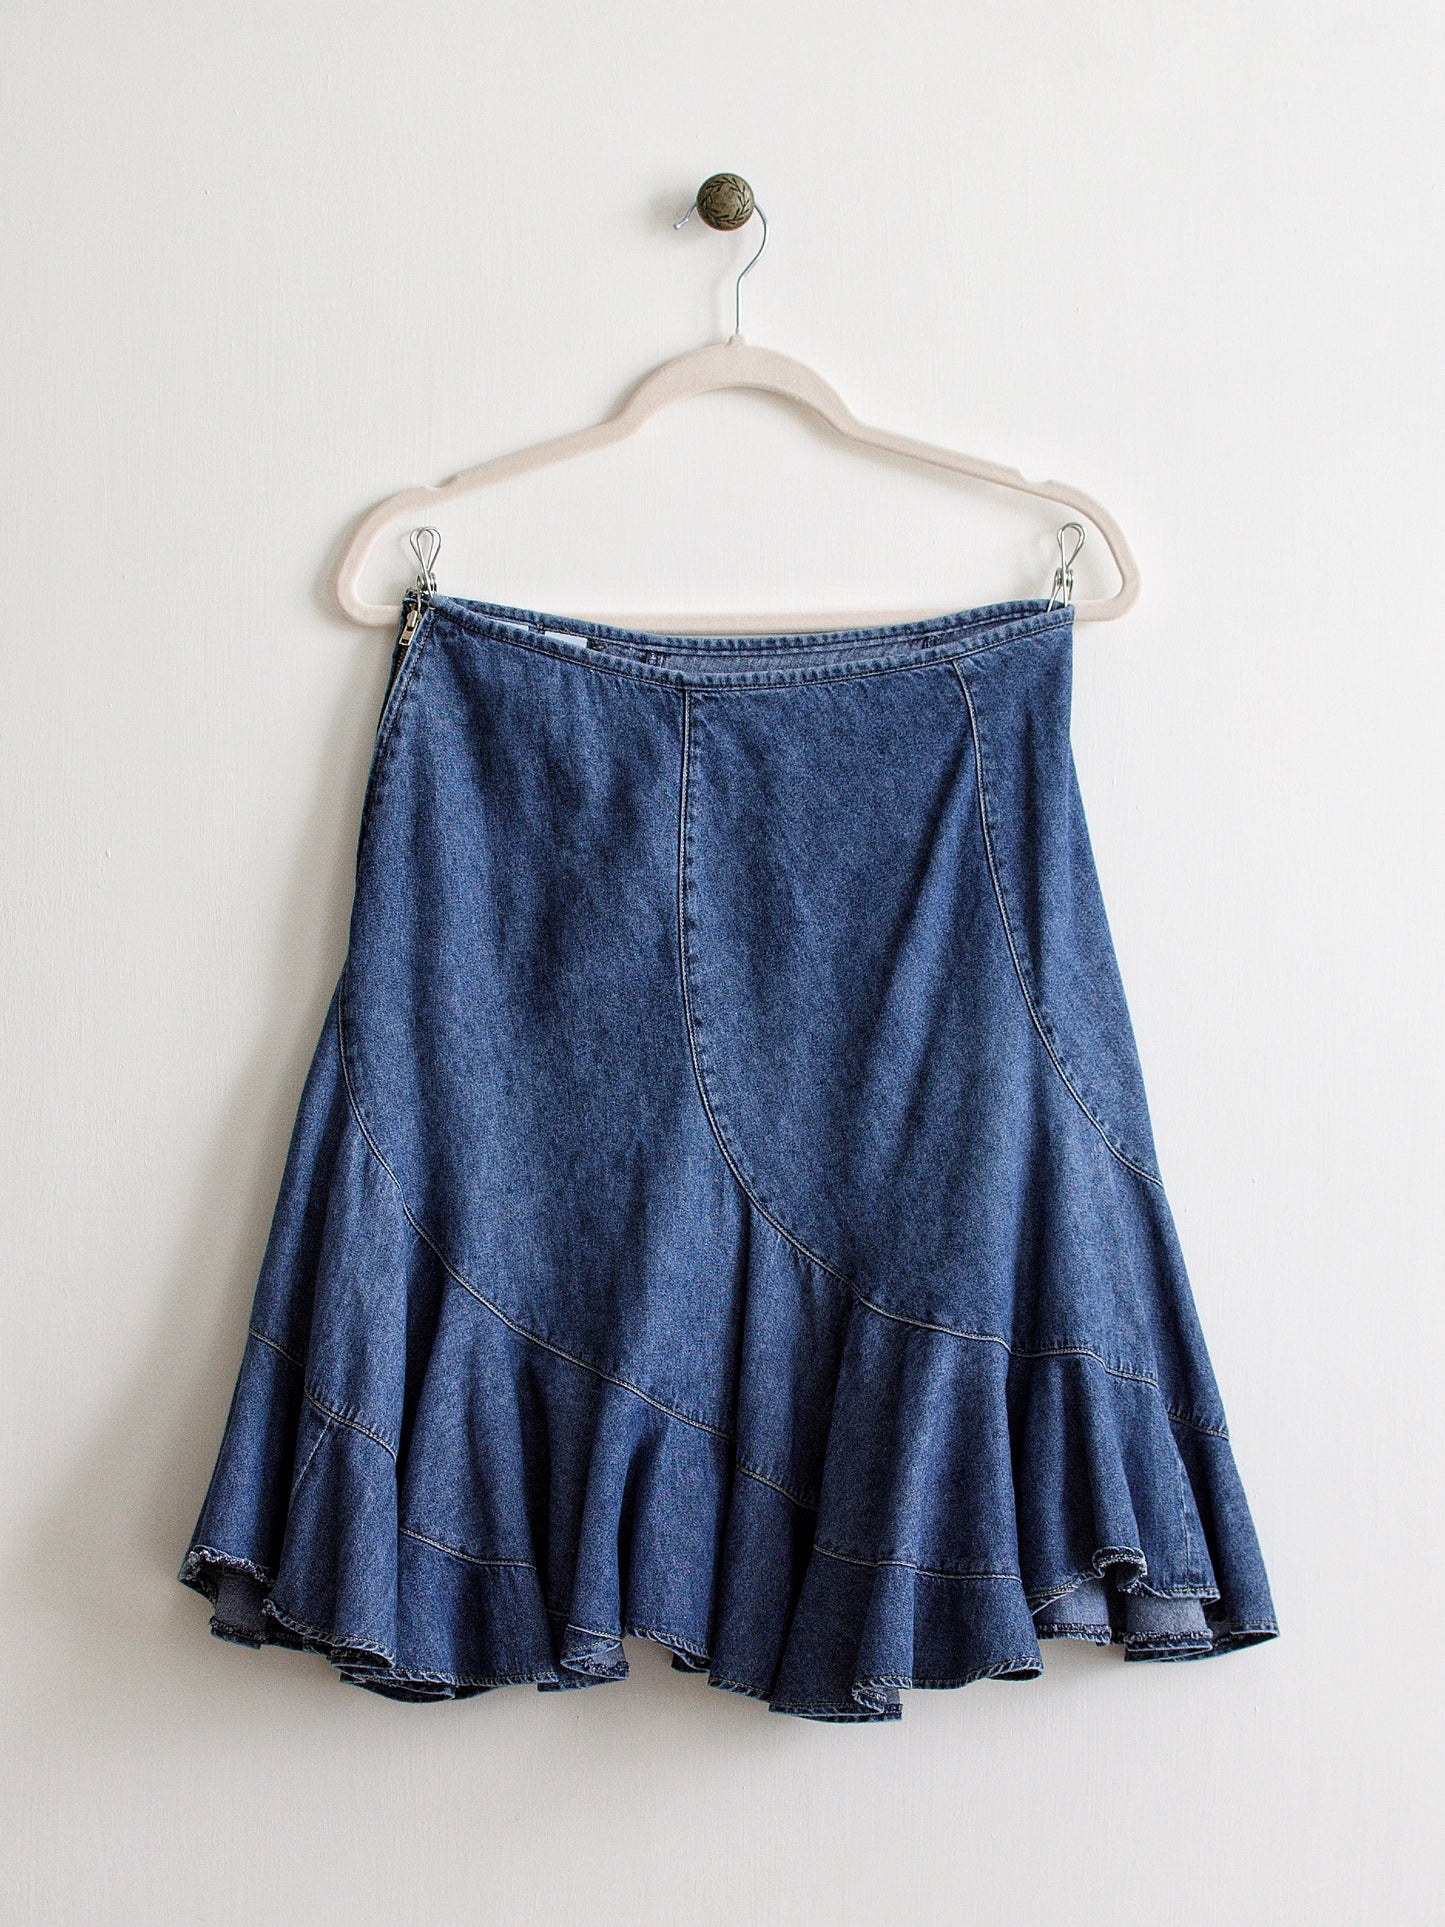 Small/Medium Liz Claiborne Skirt